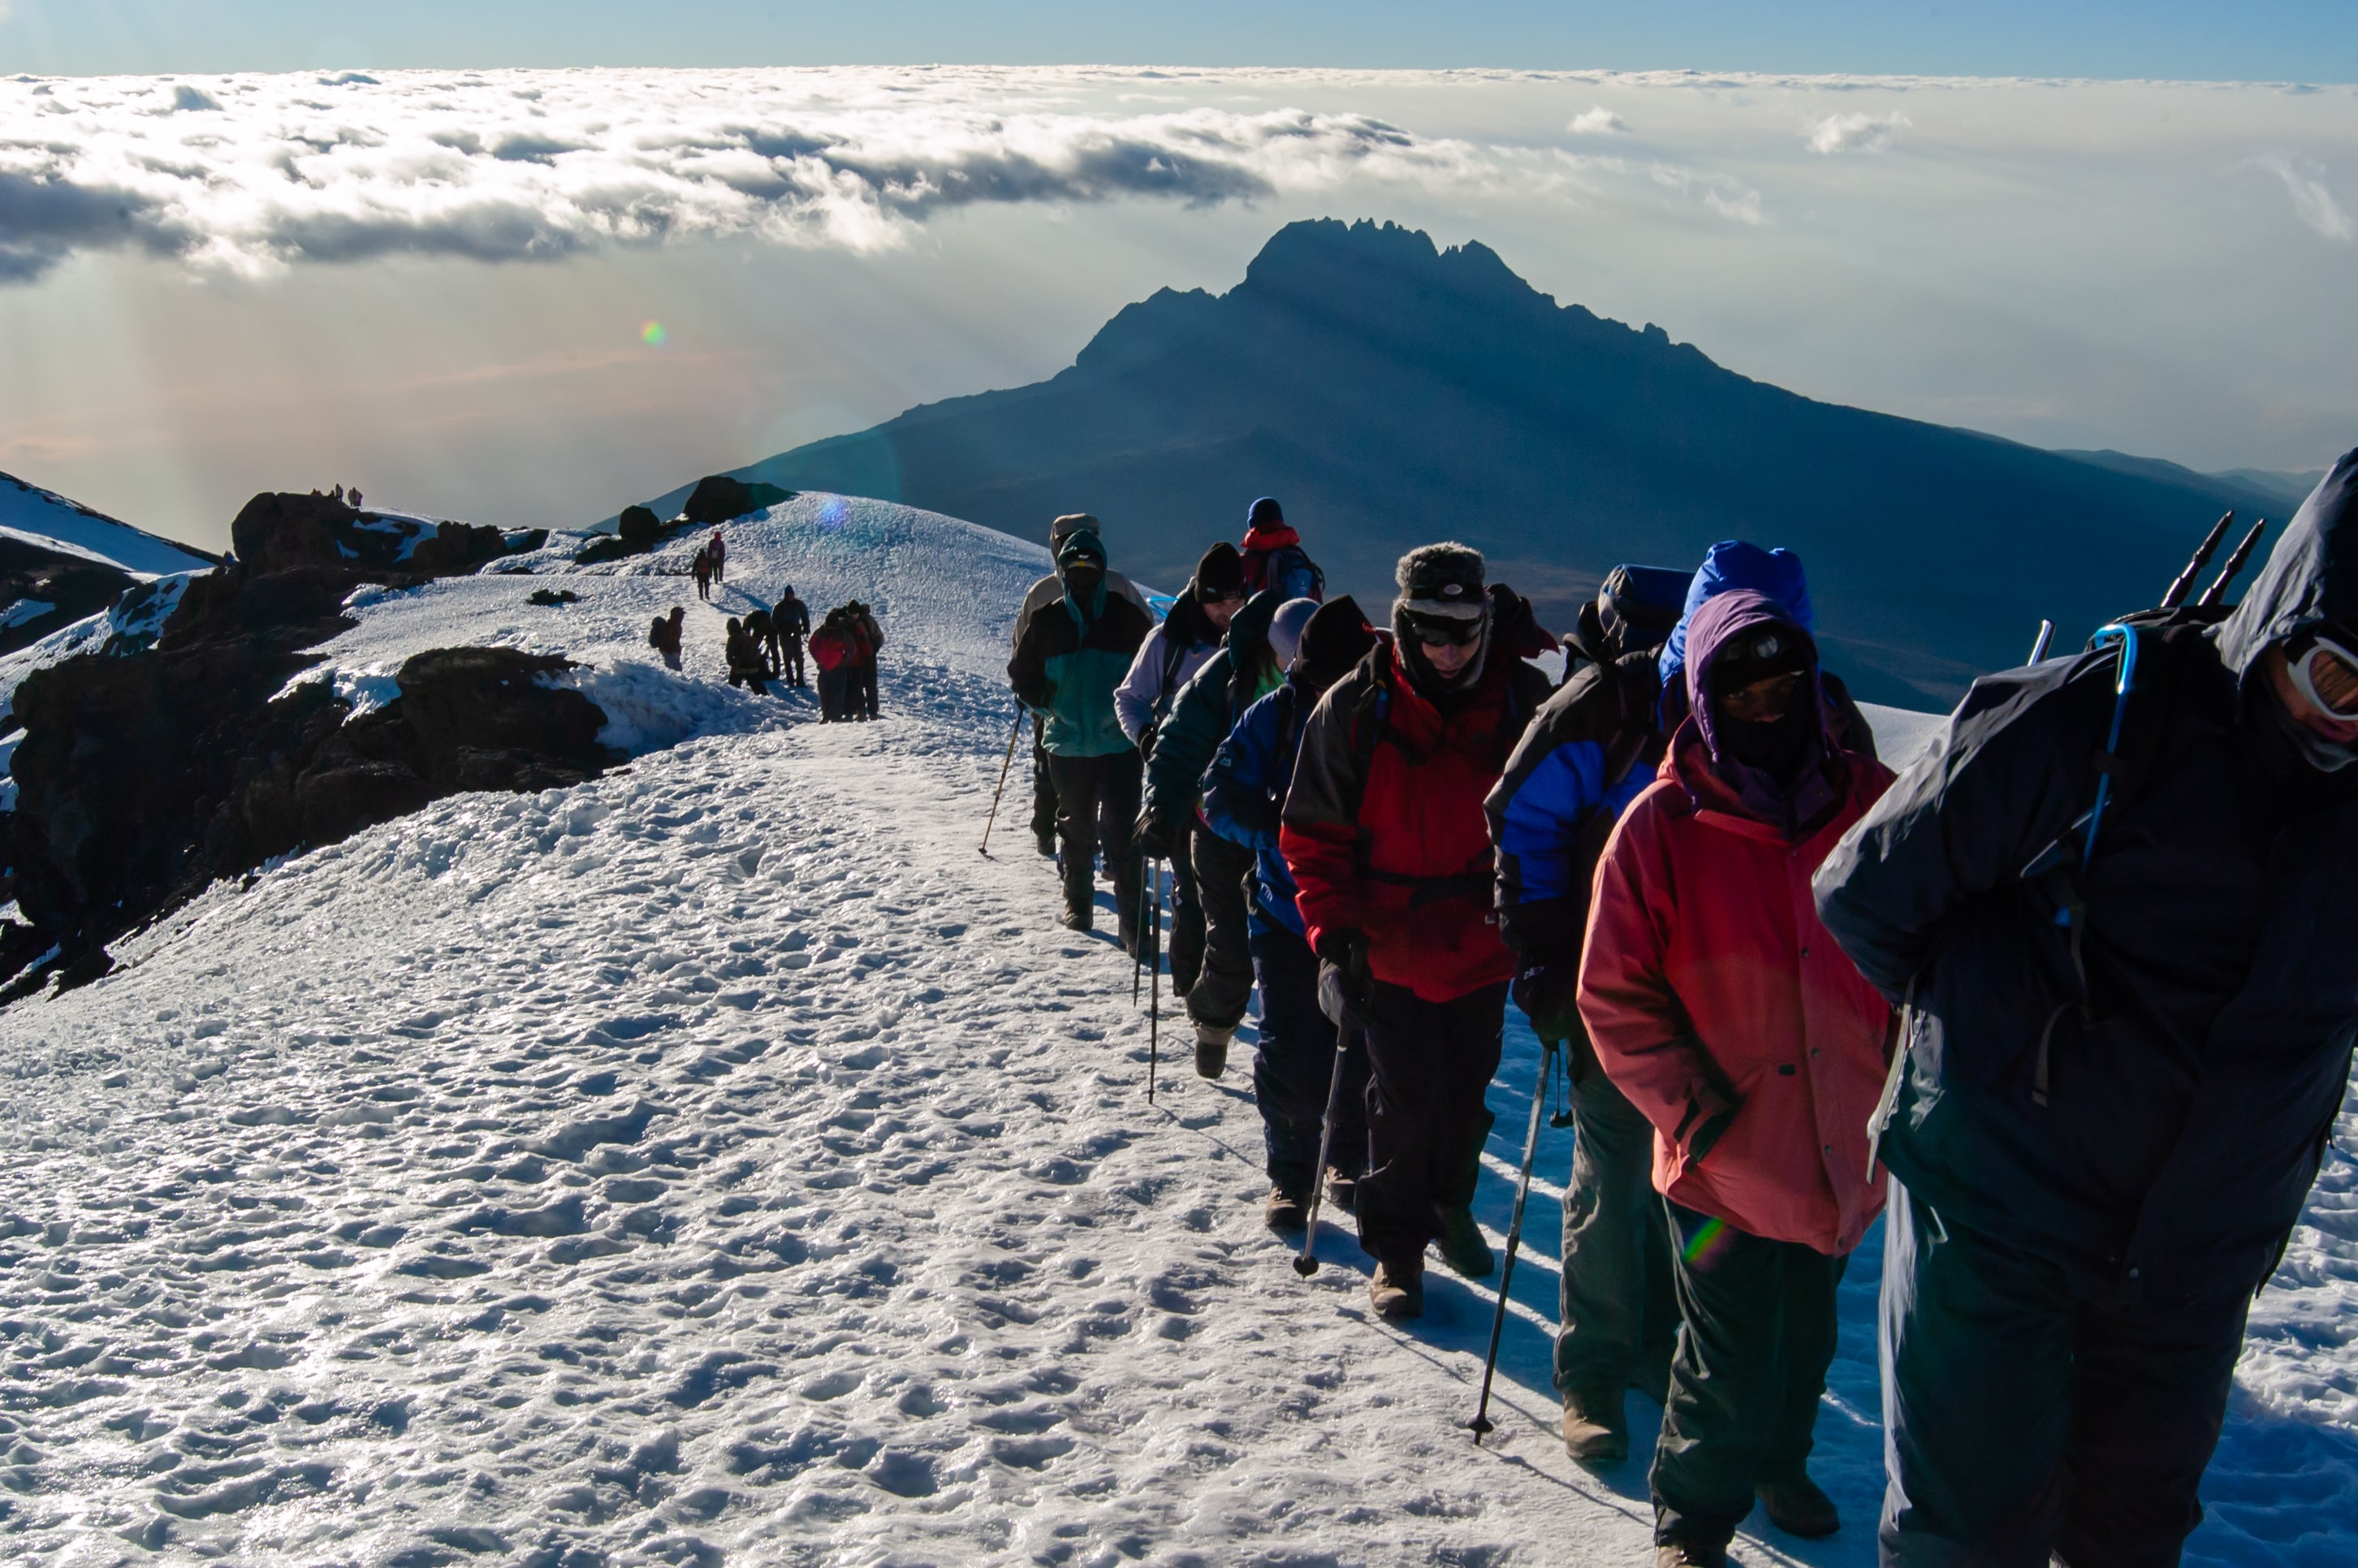 Final ascent to the top of Kilimanjaro or Uhuru Peak